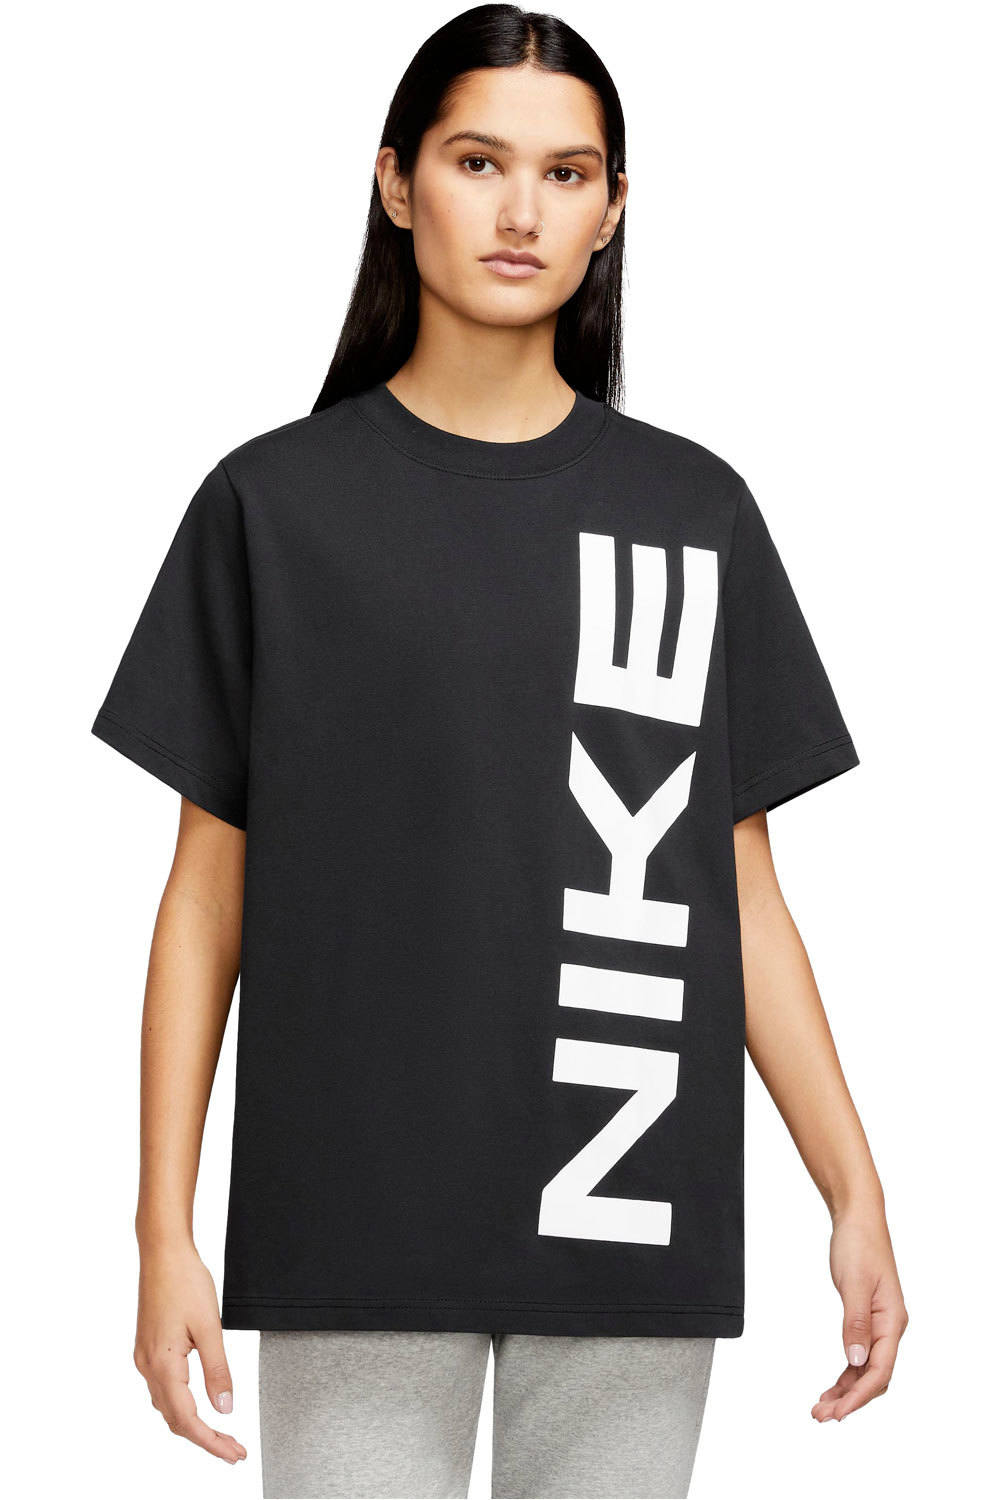 Nike camiseta manga corta mujer W NSW TEE NIKE AIR vista frontal